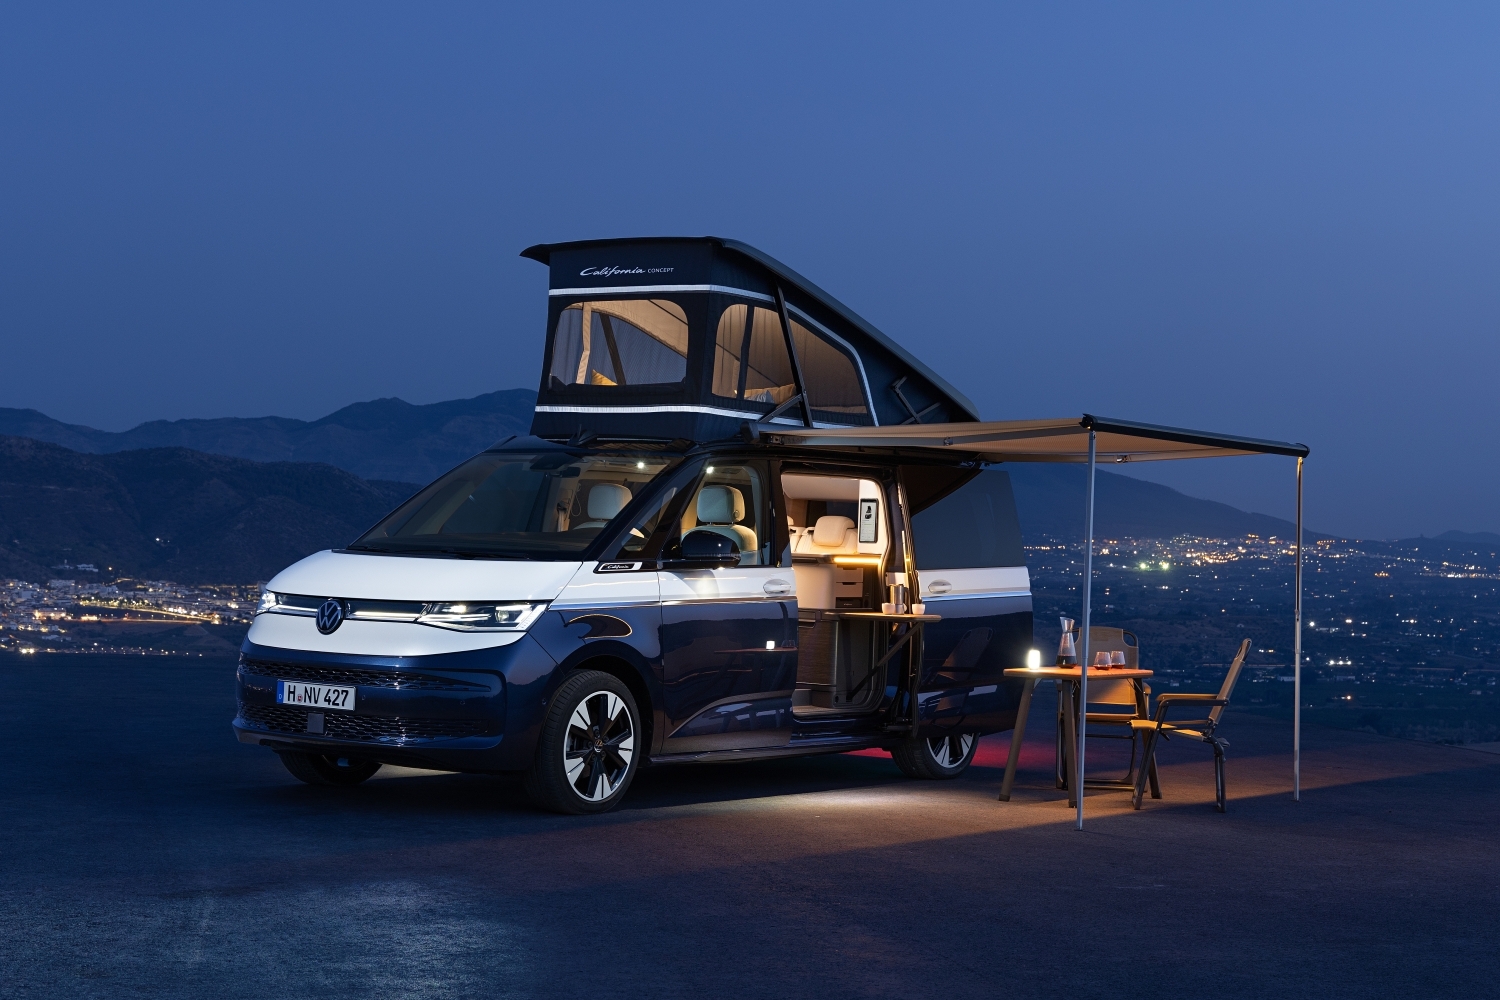 Reinvigorated VW California camper van puts more tech and comfort at  nomads' fingertips